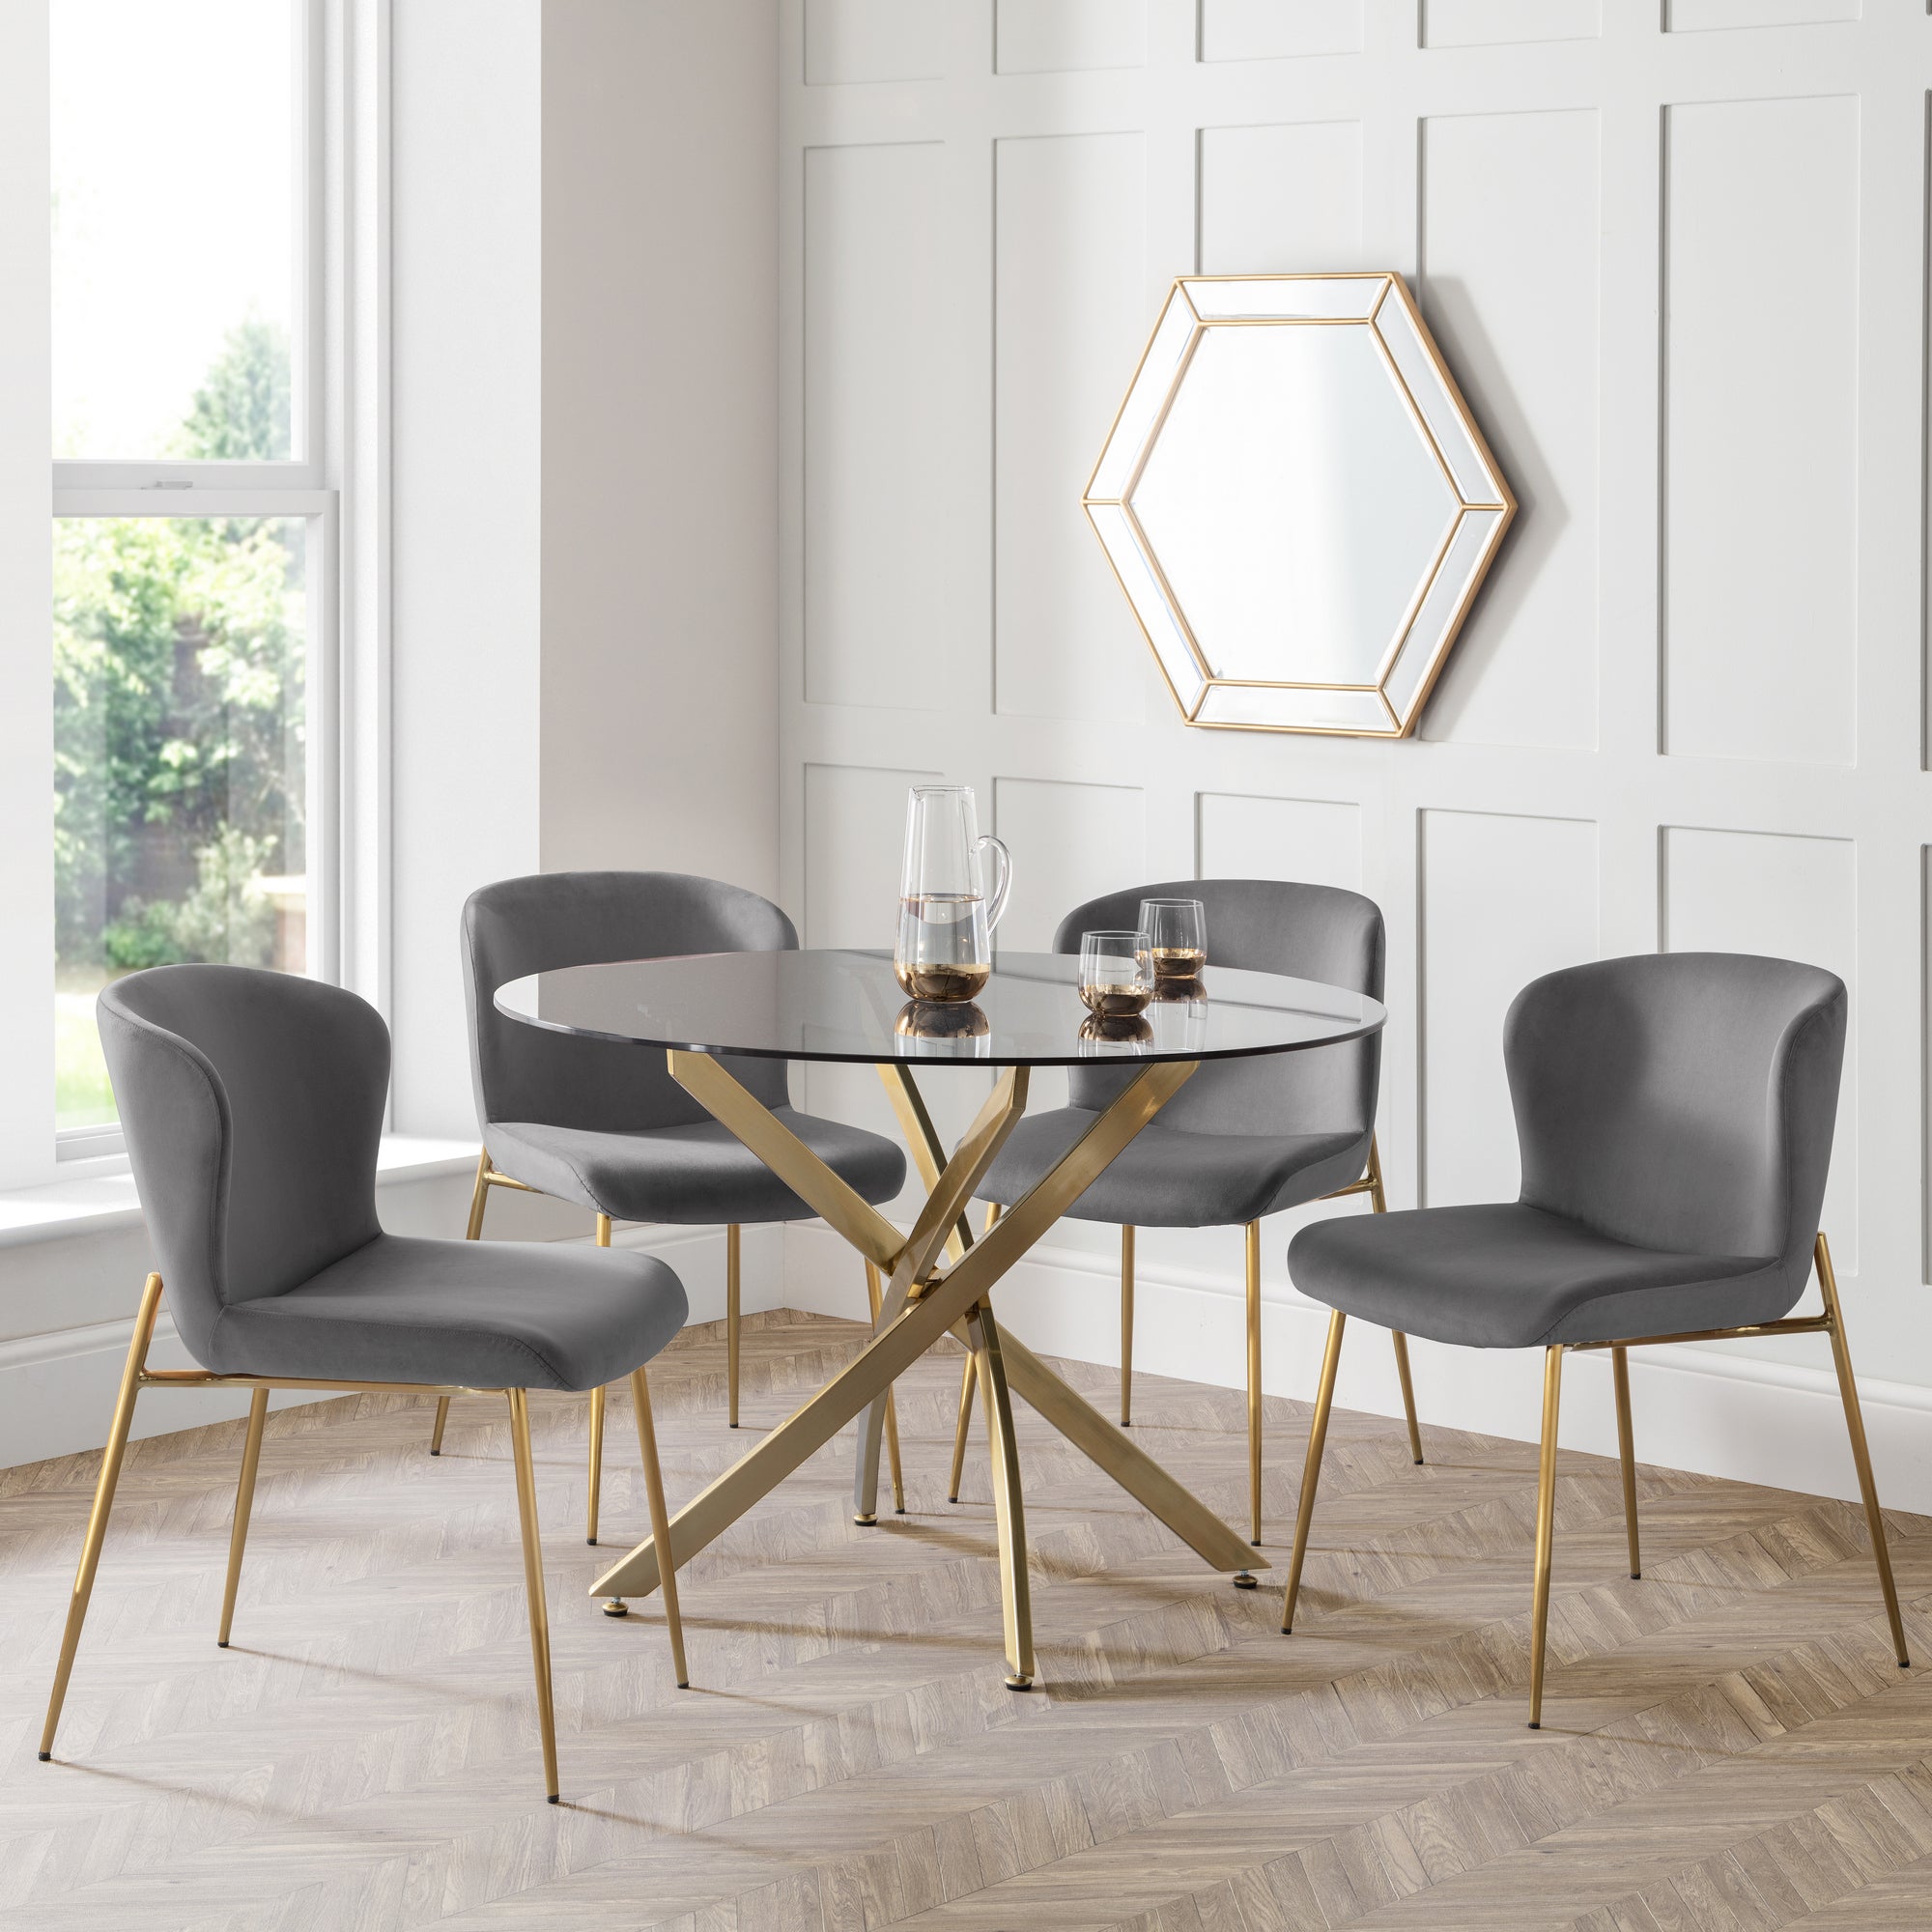 Montero Round Glass Dining Set With 4 Harper Chairs | Dunelm